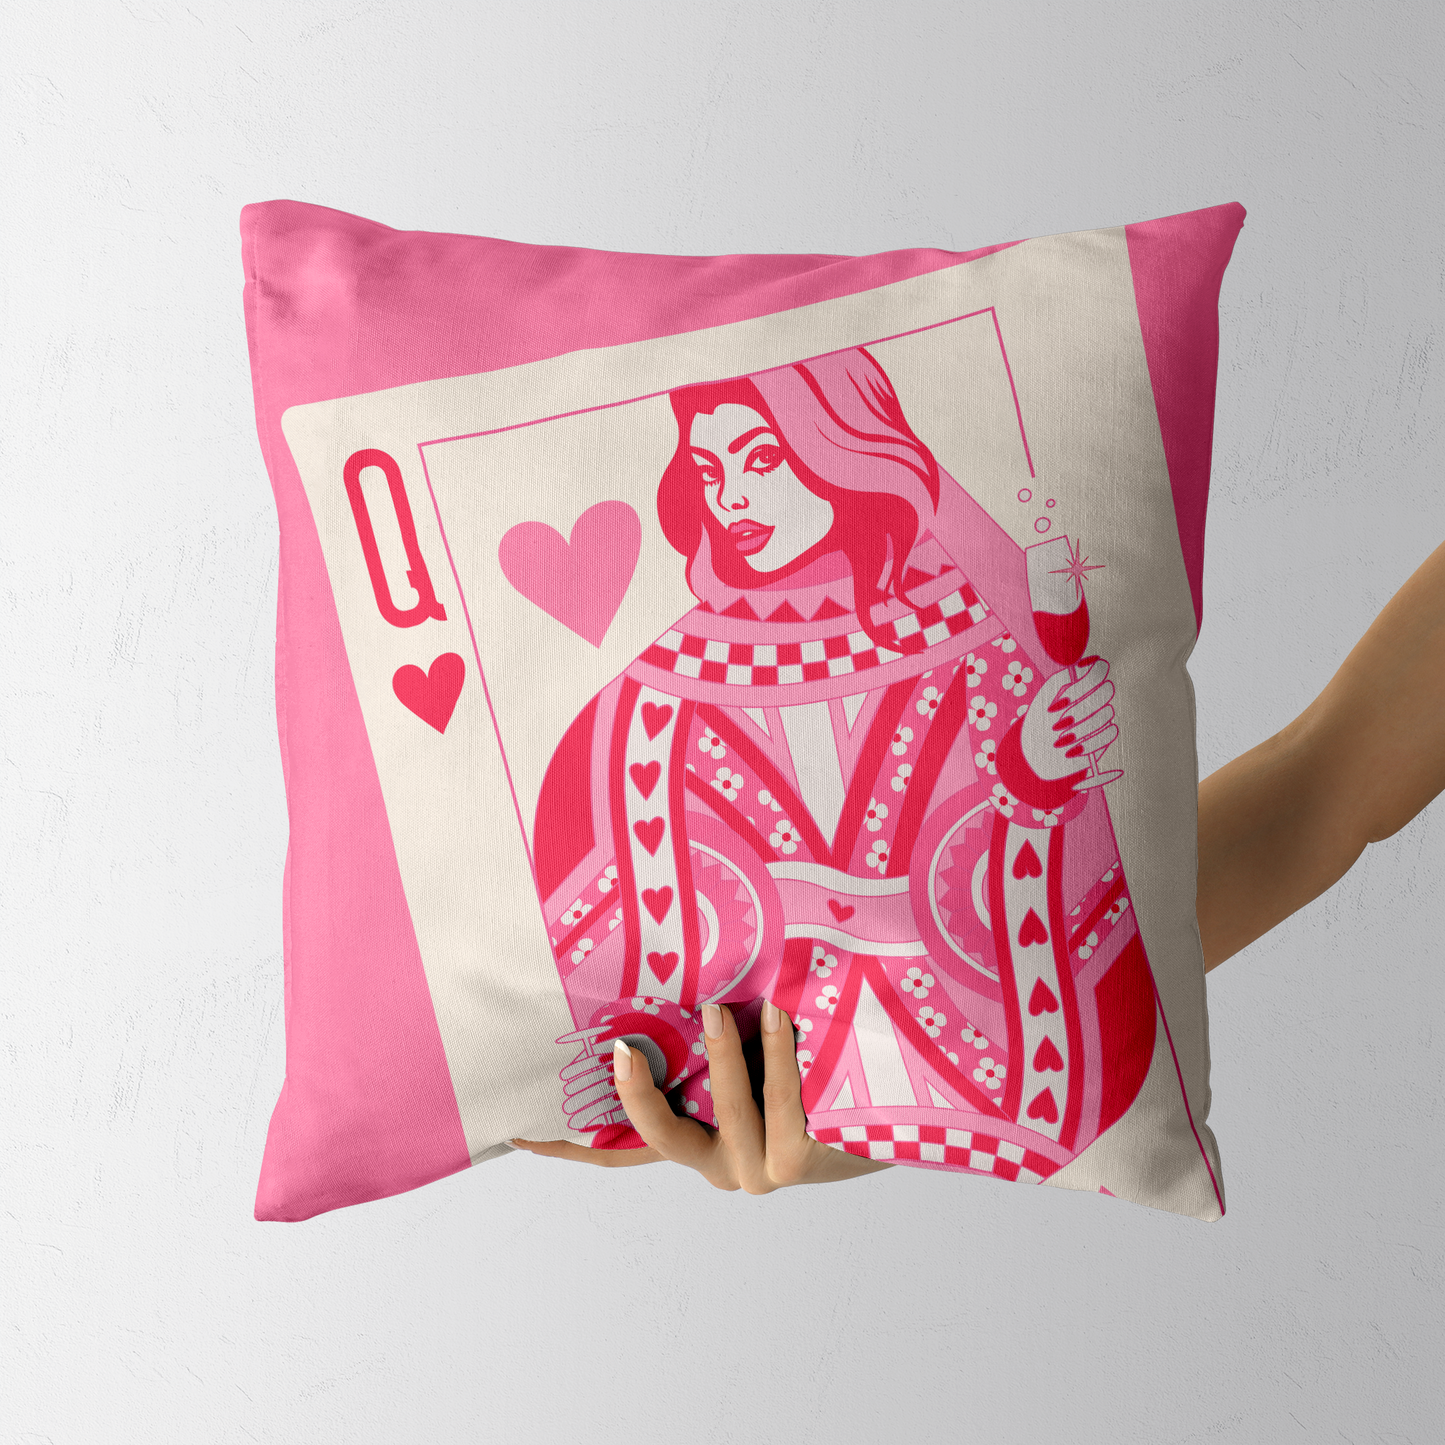 Queen Of Hearts Throw Pillow - Pink/Cream